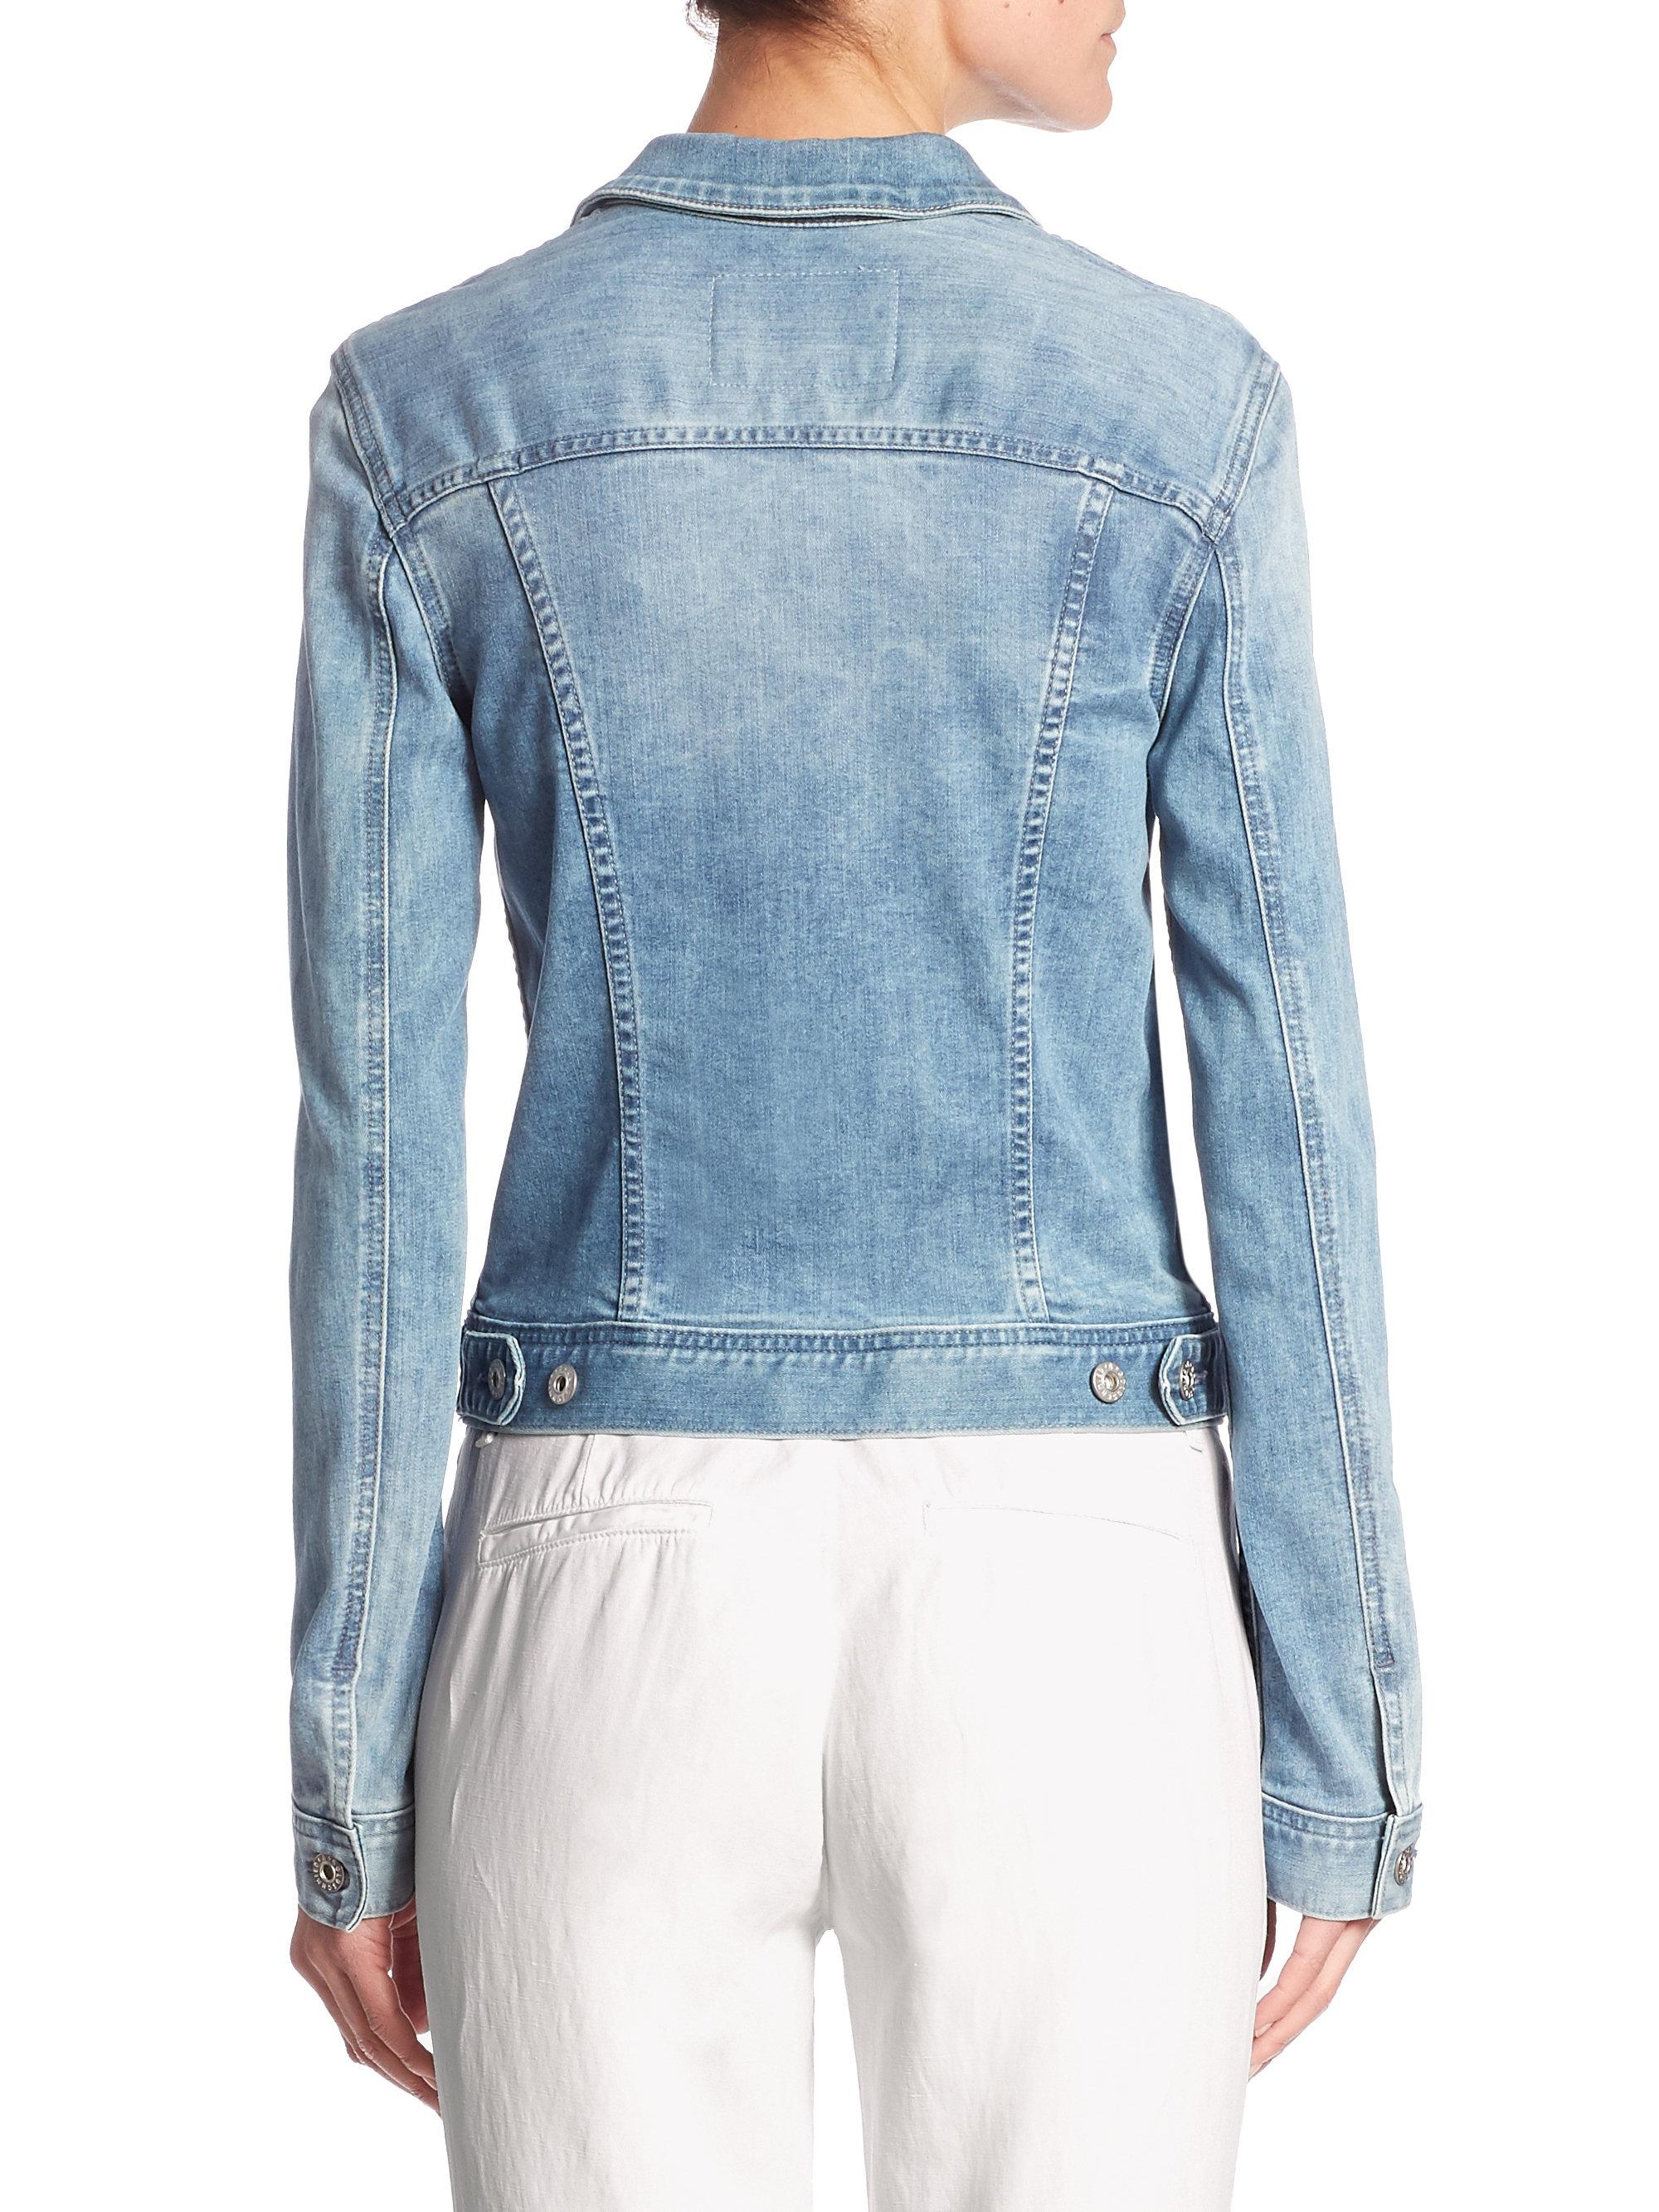 Lyst - Ag Jeans Robyn Denim Light Wash Jacket in Blue